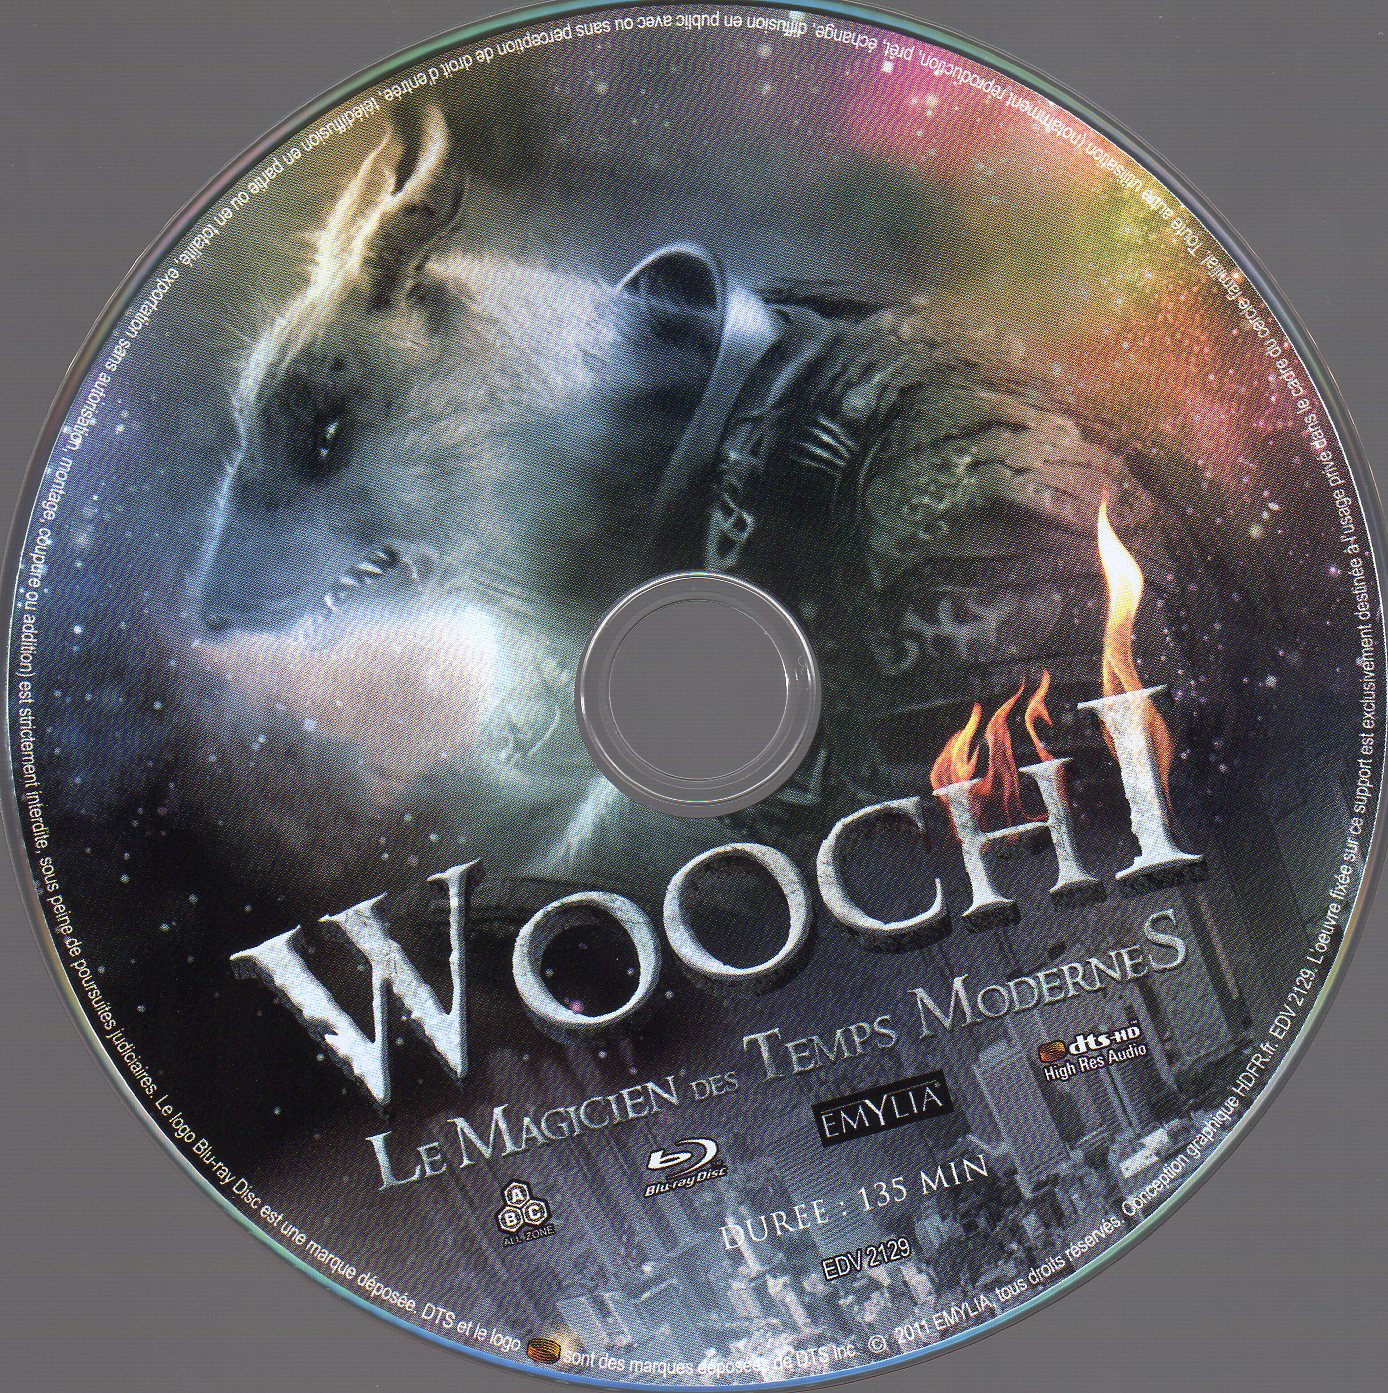 Woochi Le magicien des temps modernes (BLU-RAY)